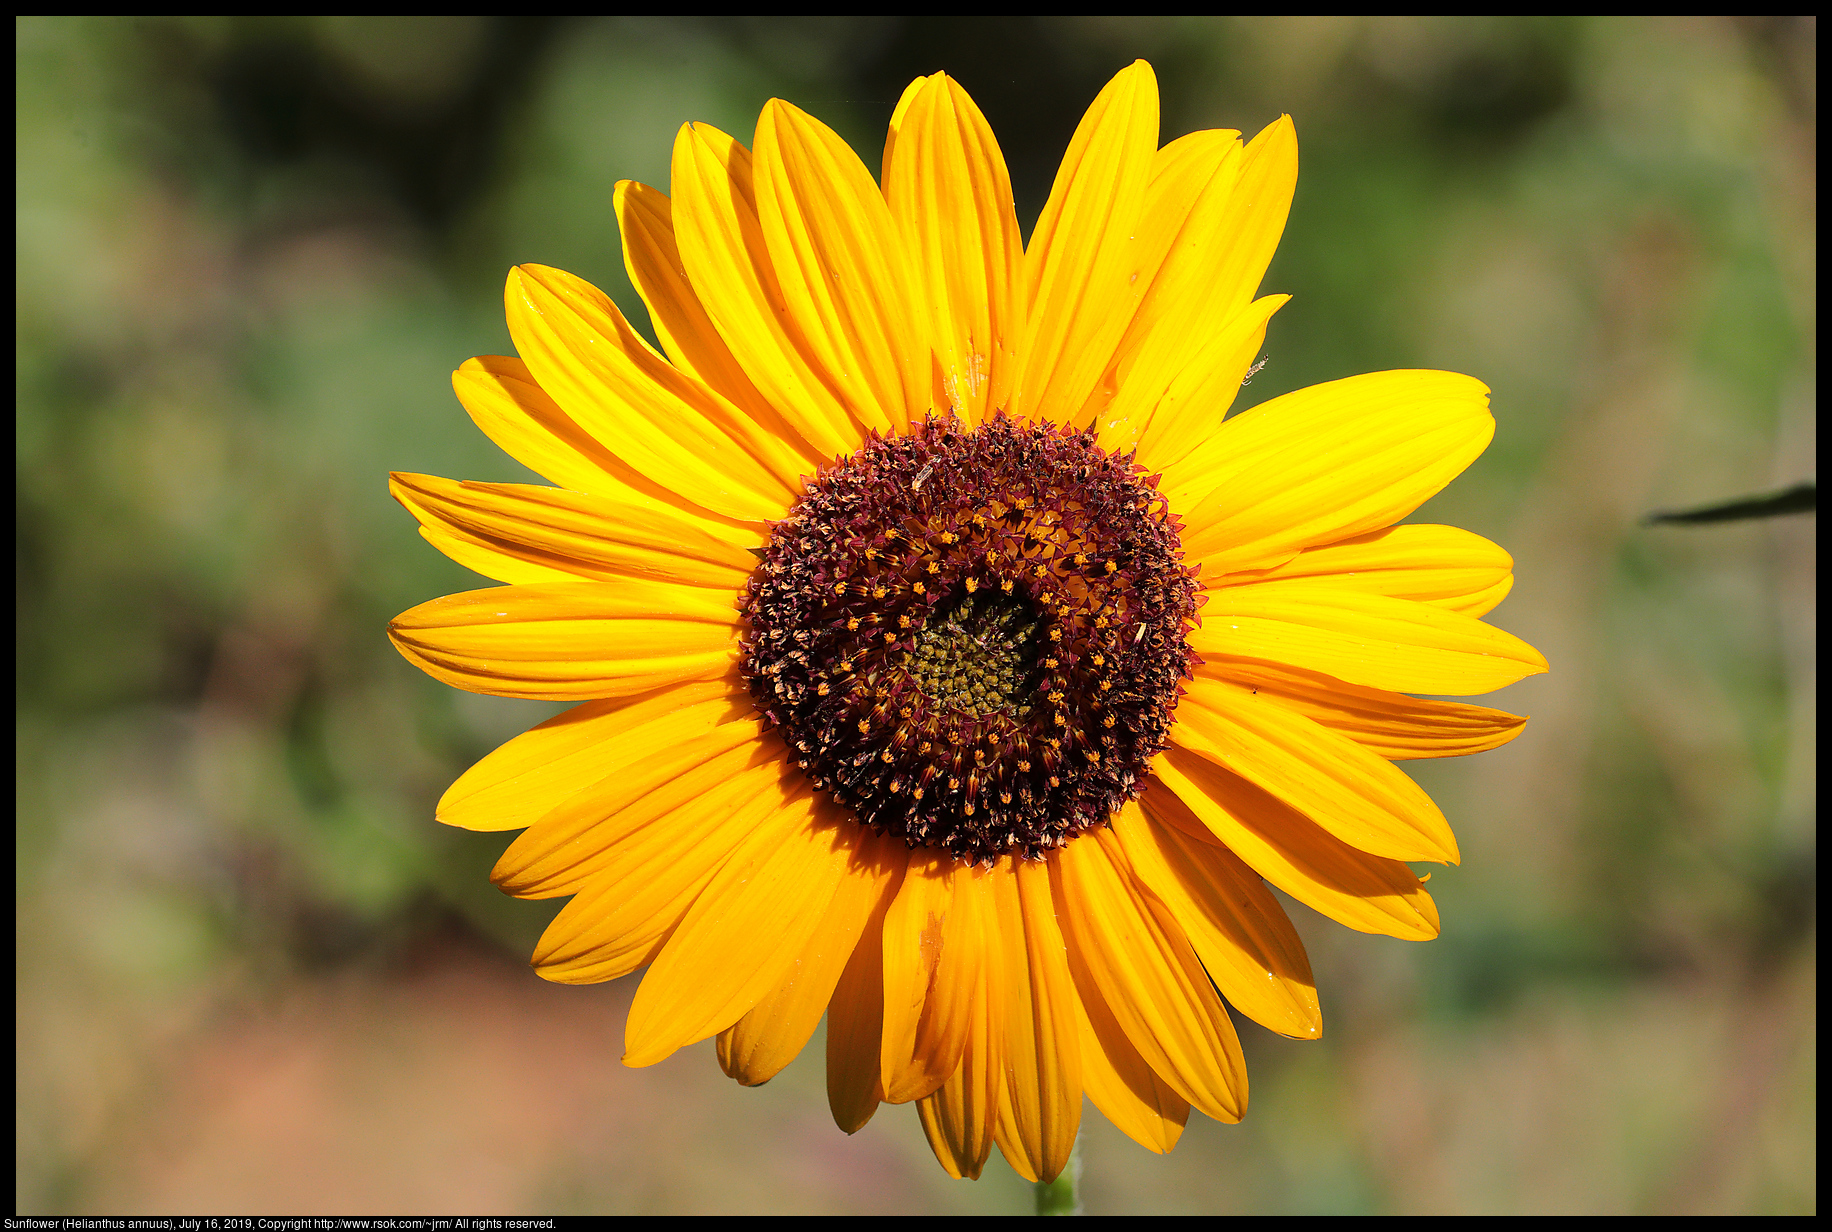 Sunflower (Helianthus annuus), July 16, 2019